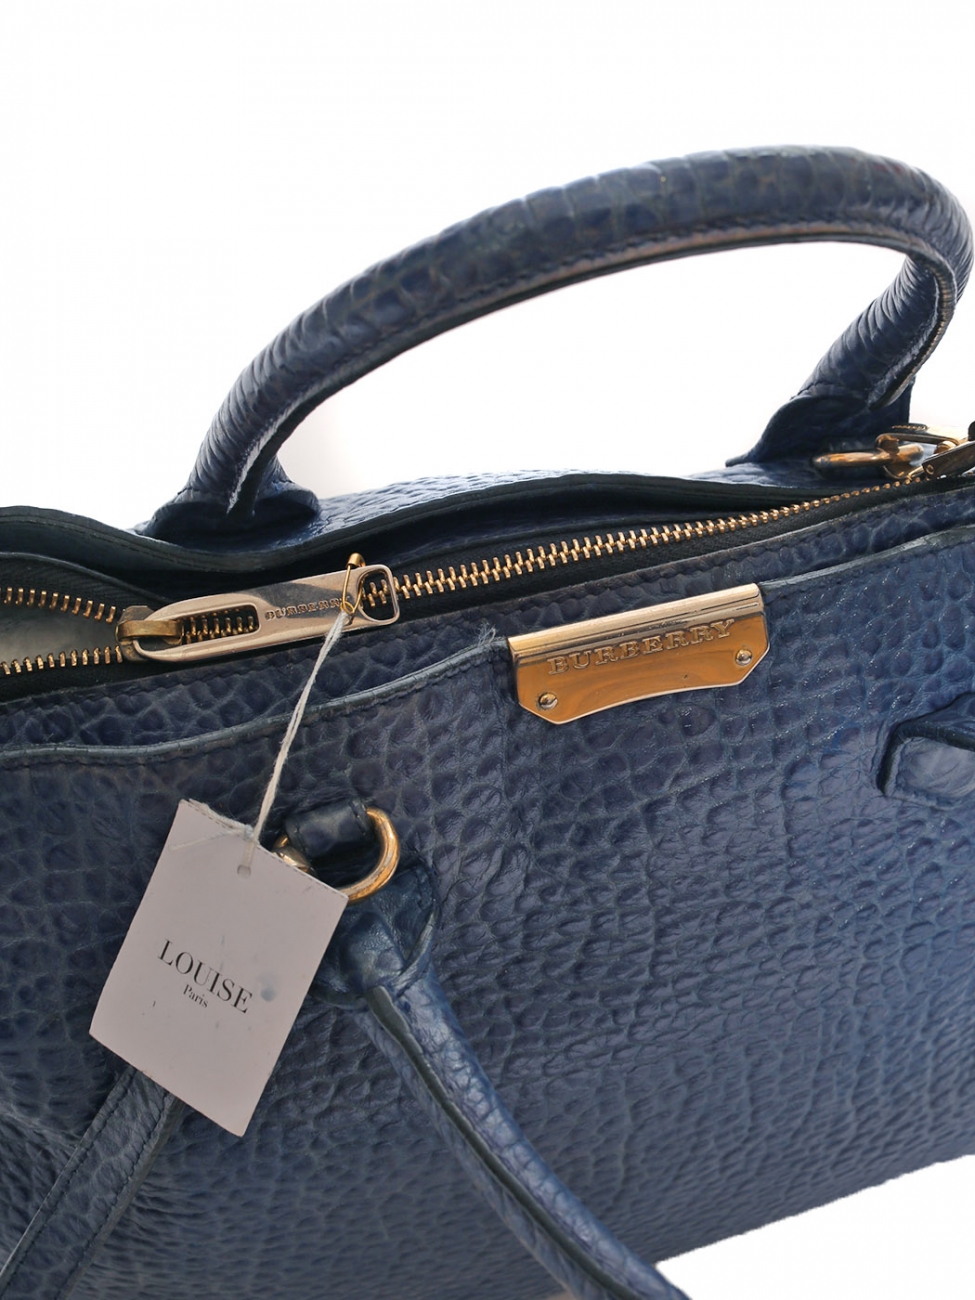 Burberry Leather Shoulder Handbags | Mercari